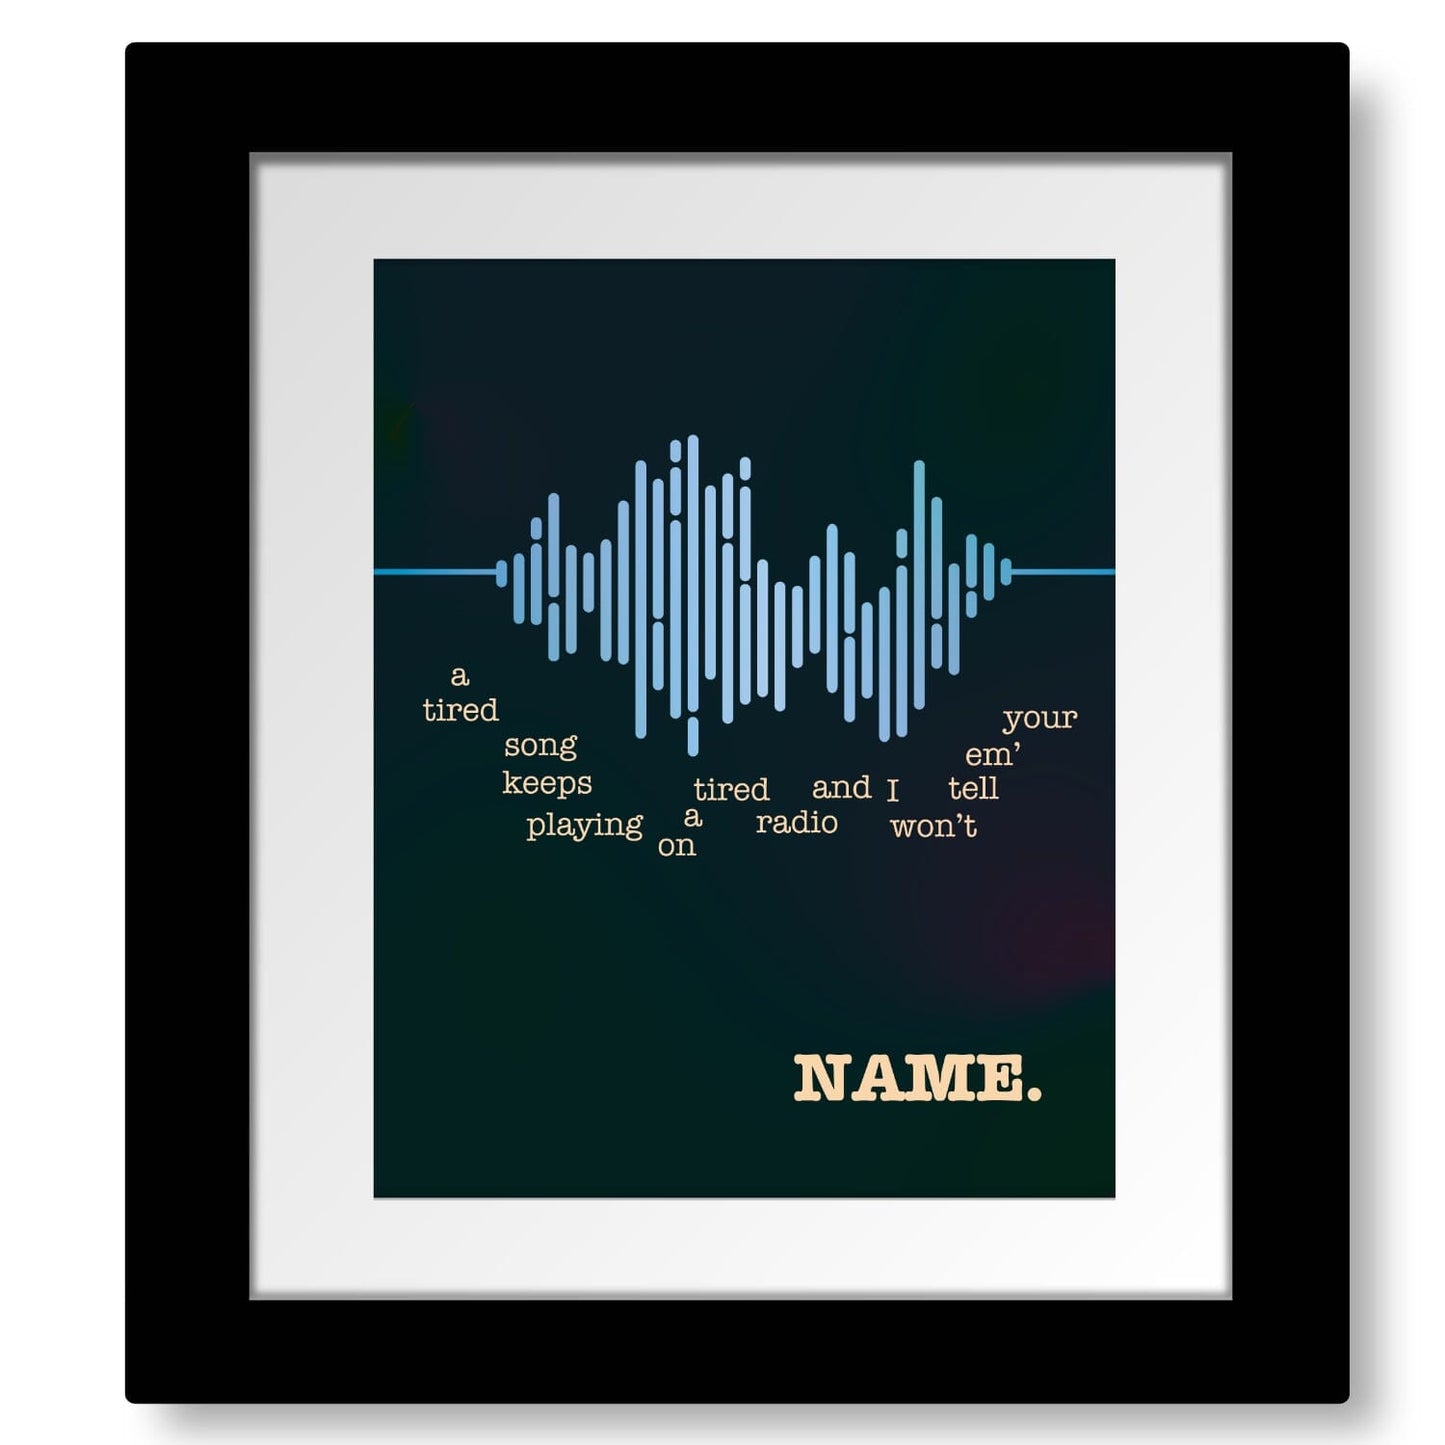 Name by Goo Goo Dolls - Pop Music Song Lyrics Art Poster Song Lyrics Art Song Lyrics Art 8x10 Matted and Framed Print 